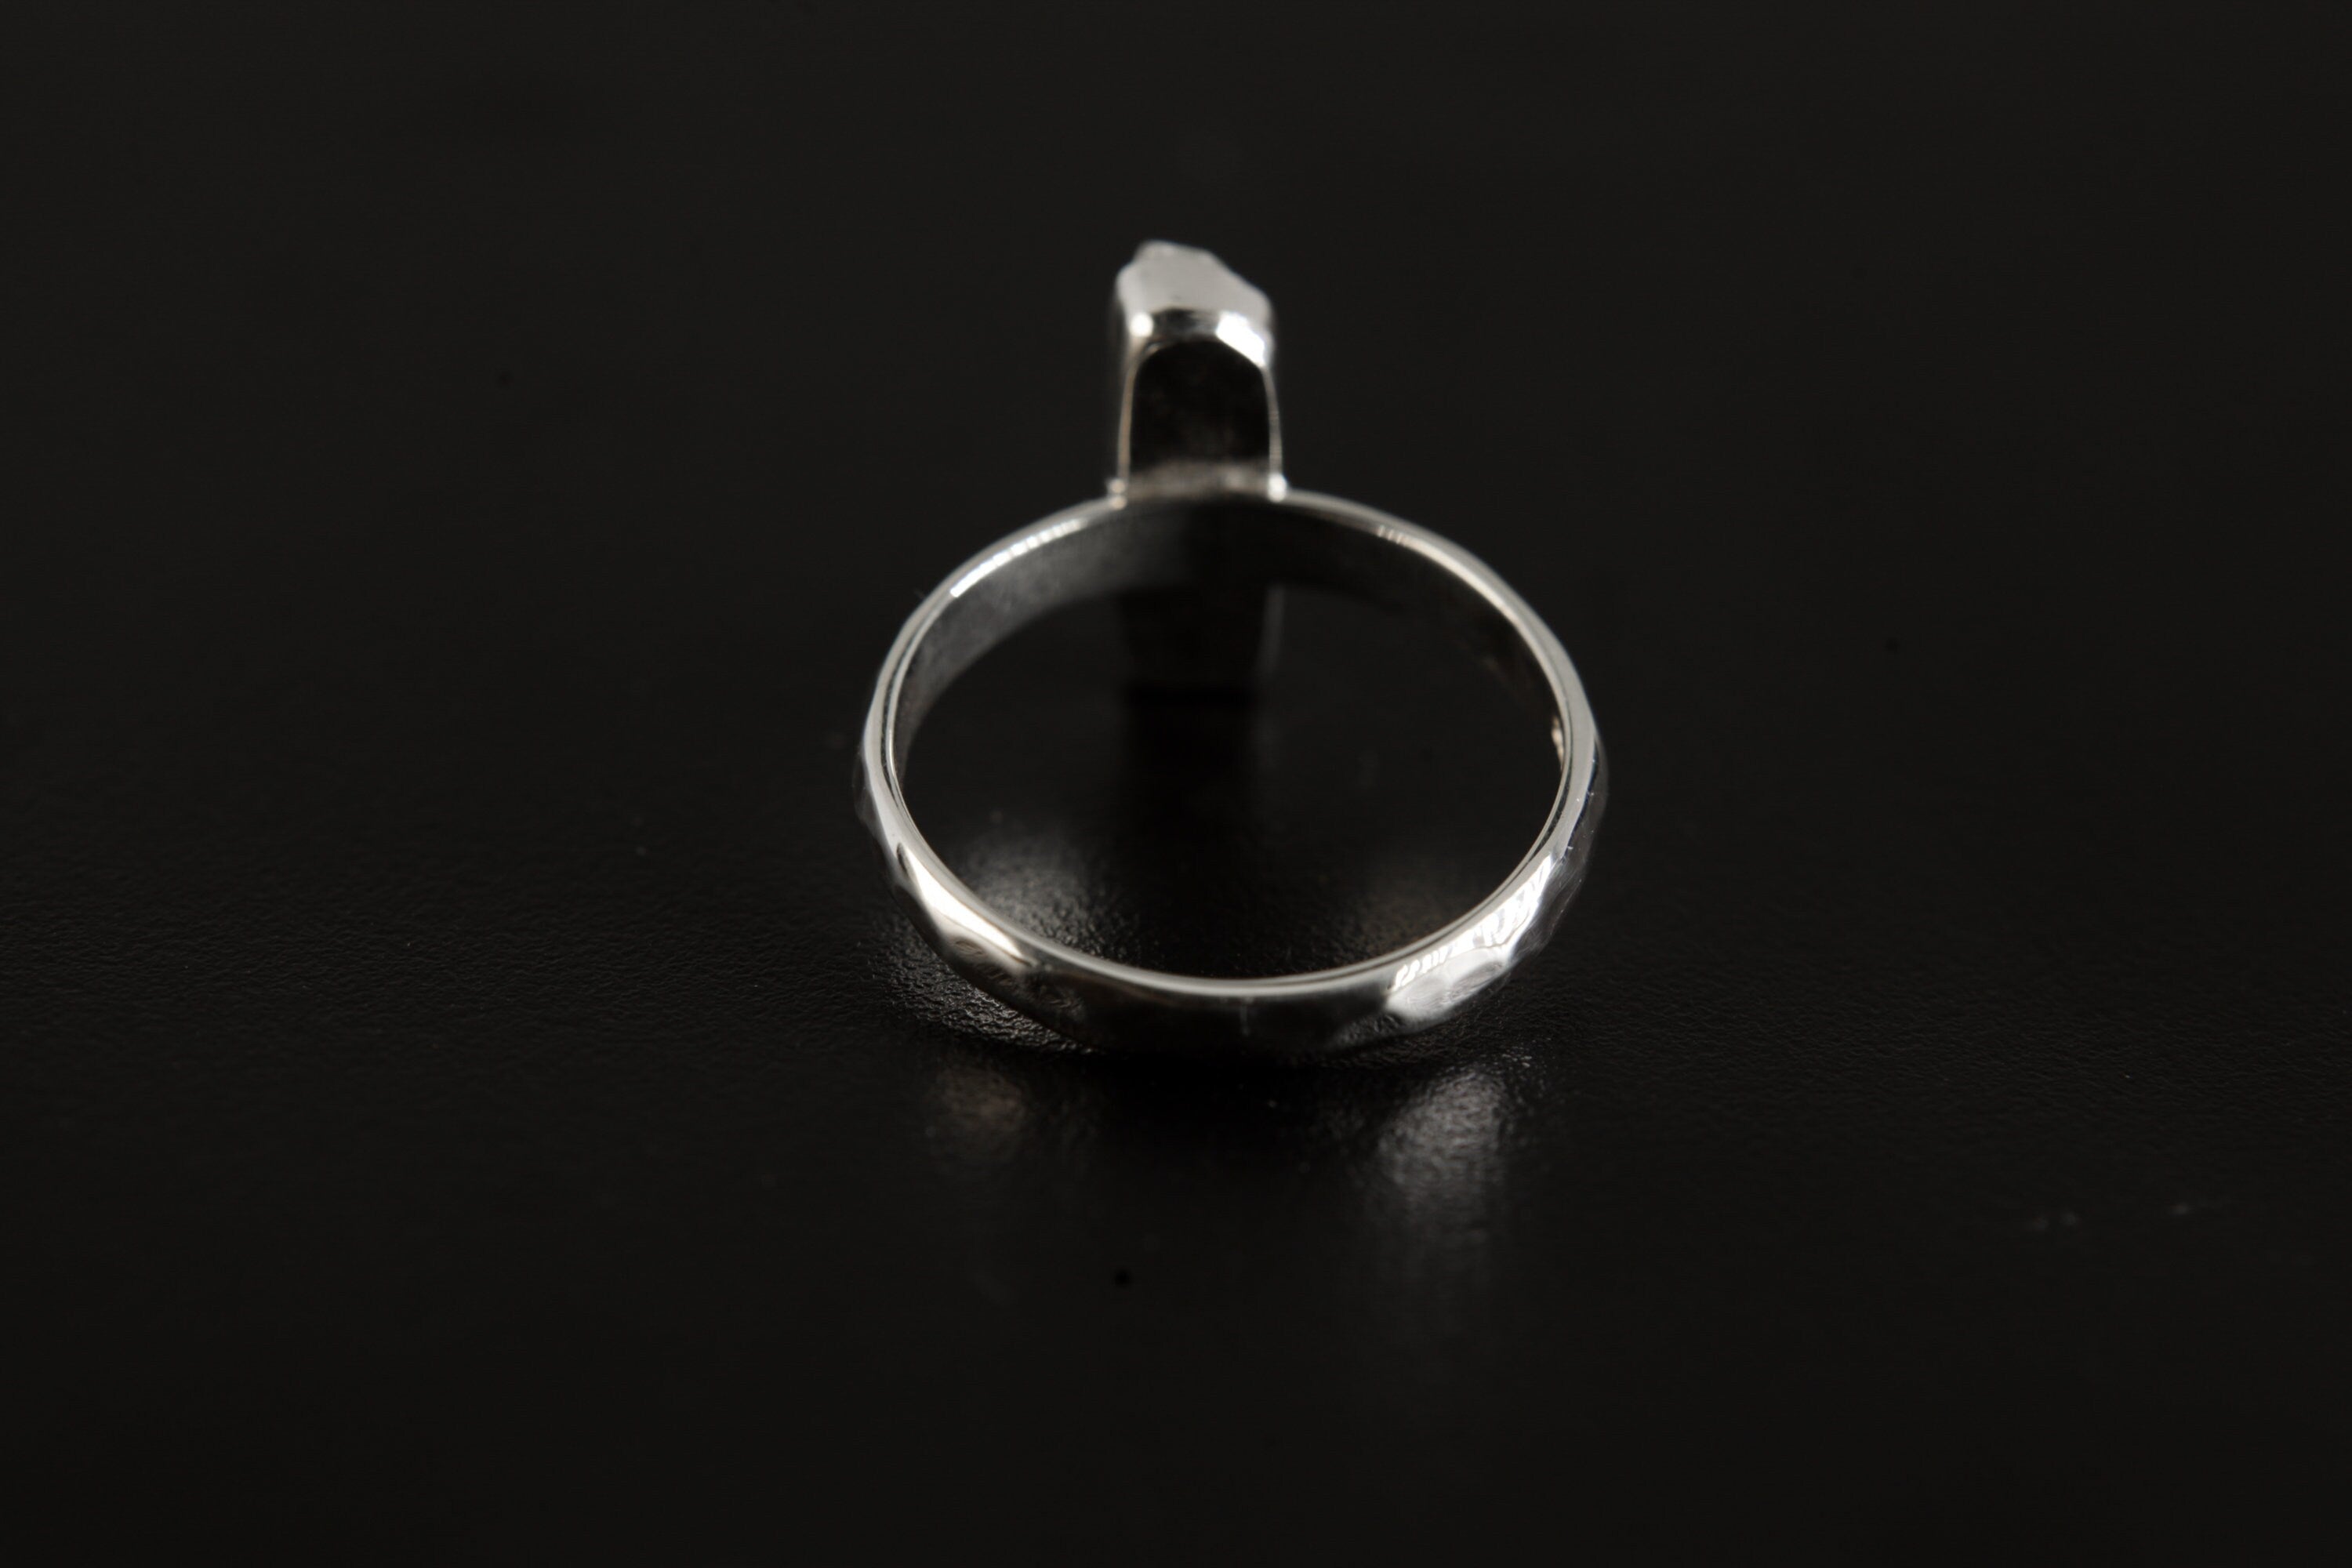 Aqua Essence: Long Square Aquamarine - Sterling Silver Ring - Hammer Textured & Shiny Finish - Size 6 US - NO/03